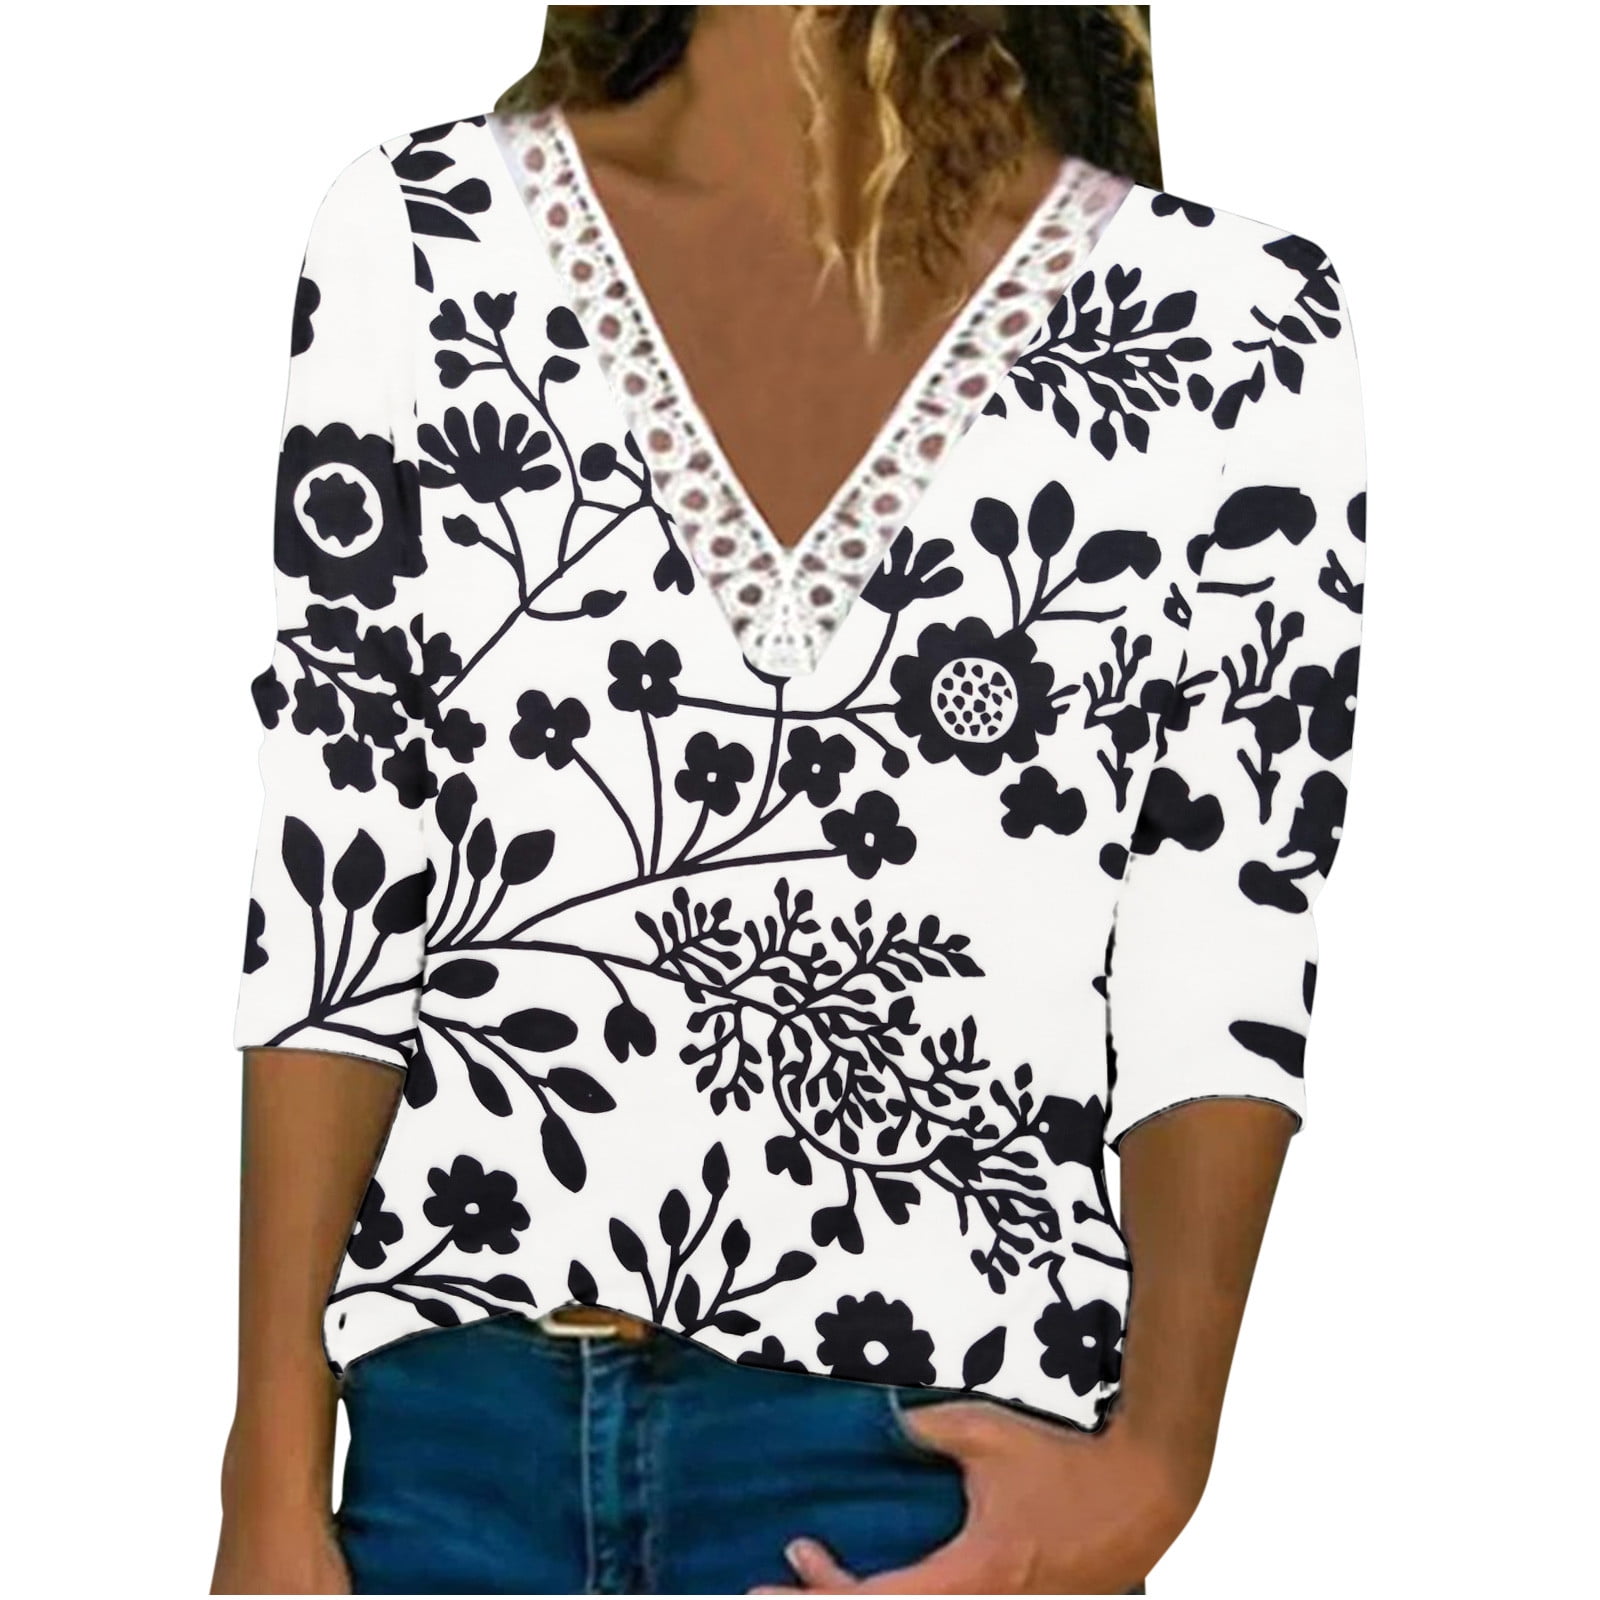 Yyeselk Flower Printed Sweatshirt for Women,Women Trendy Loose